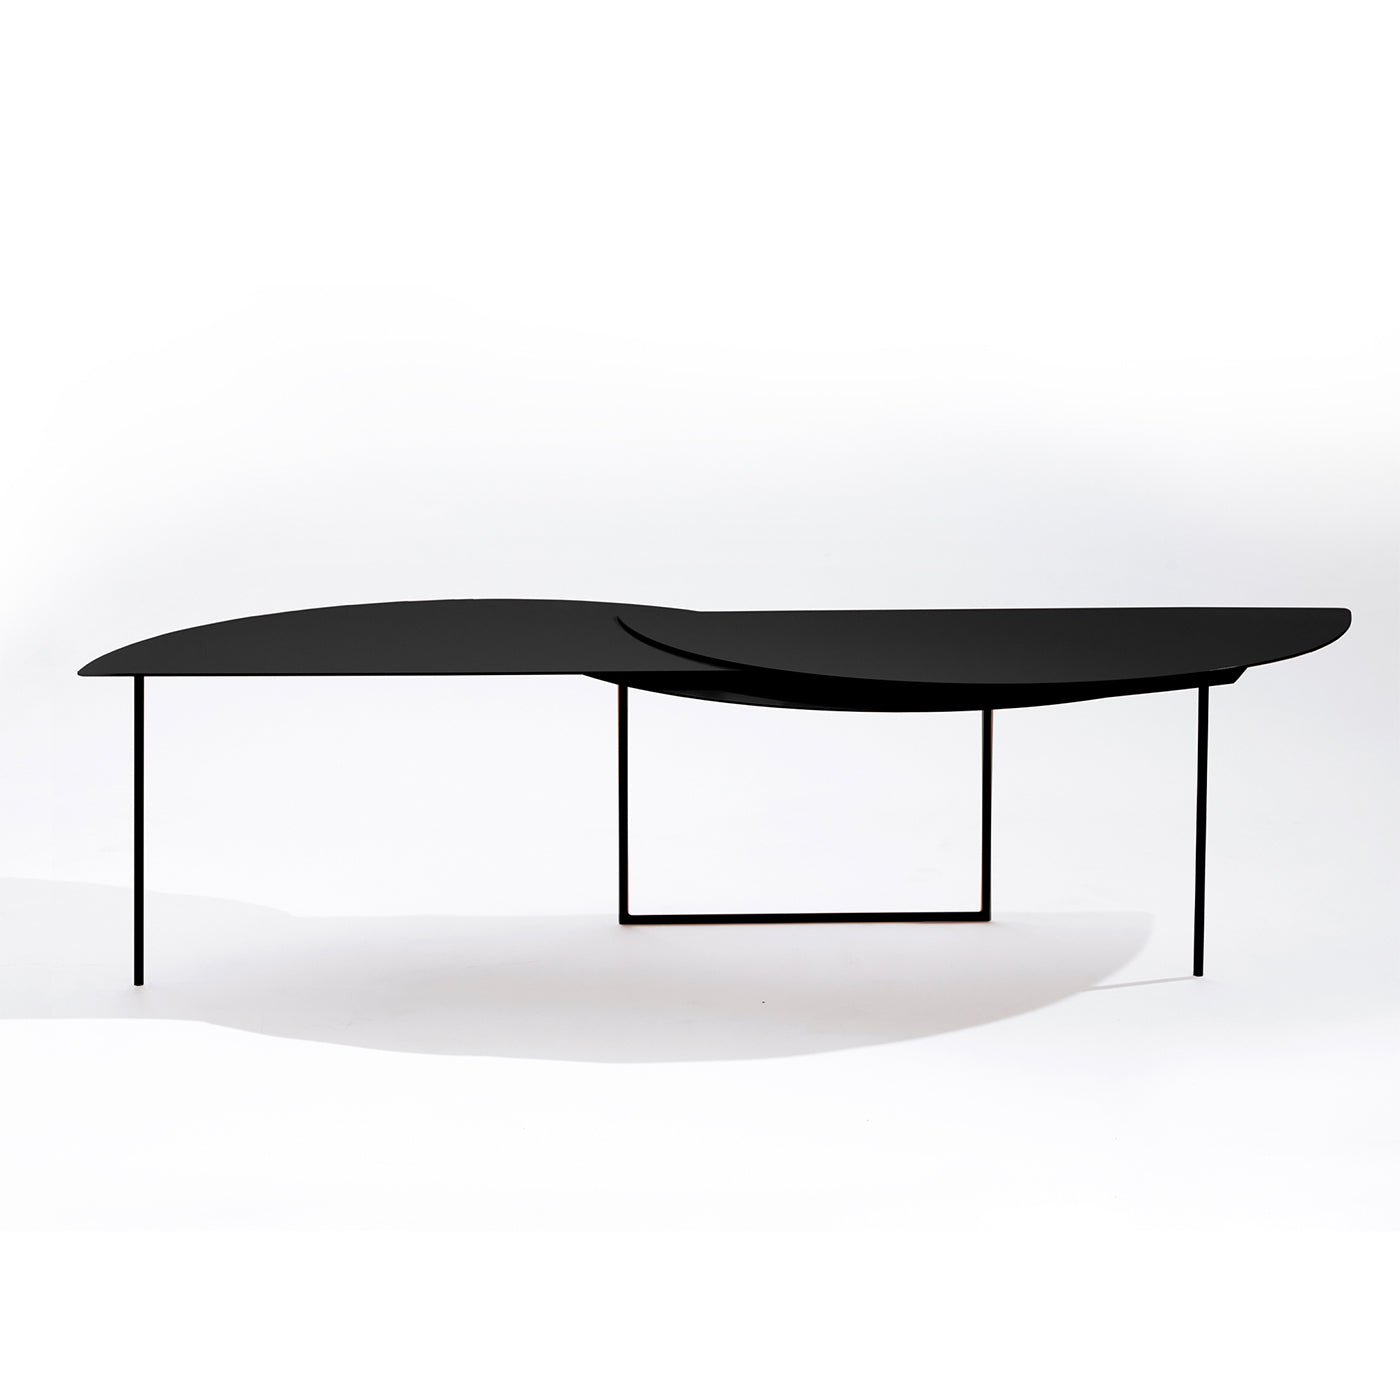 ALHENA side table #4 by Kathrin Charlotte Bohr - Alternative view 1